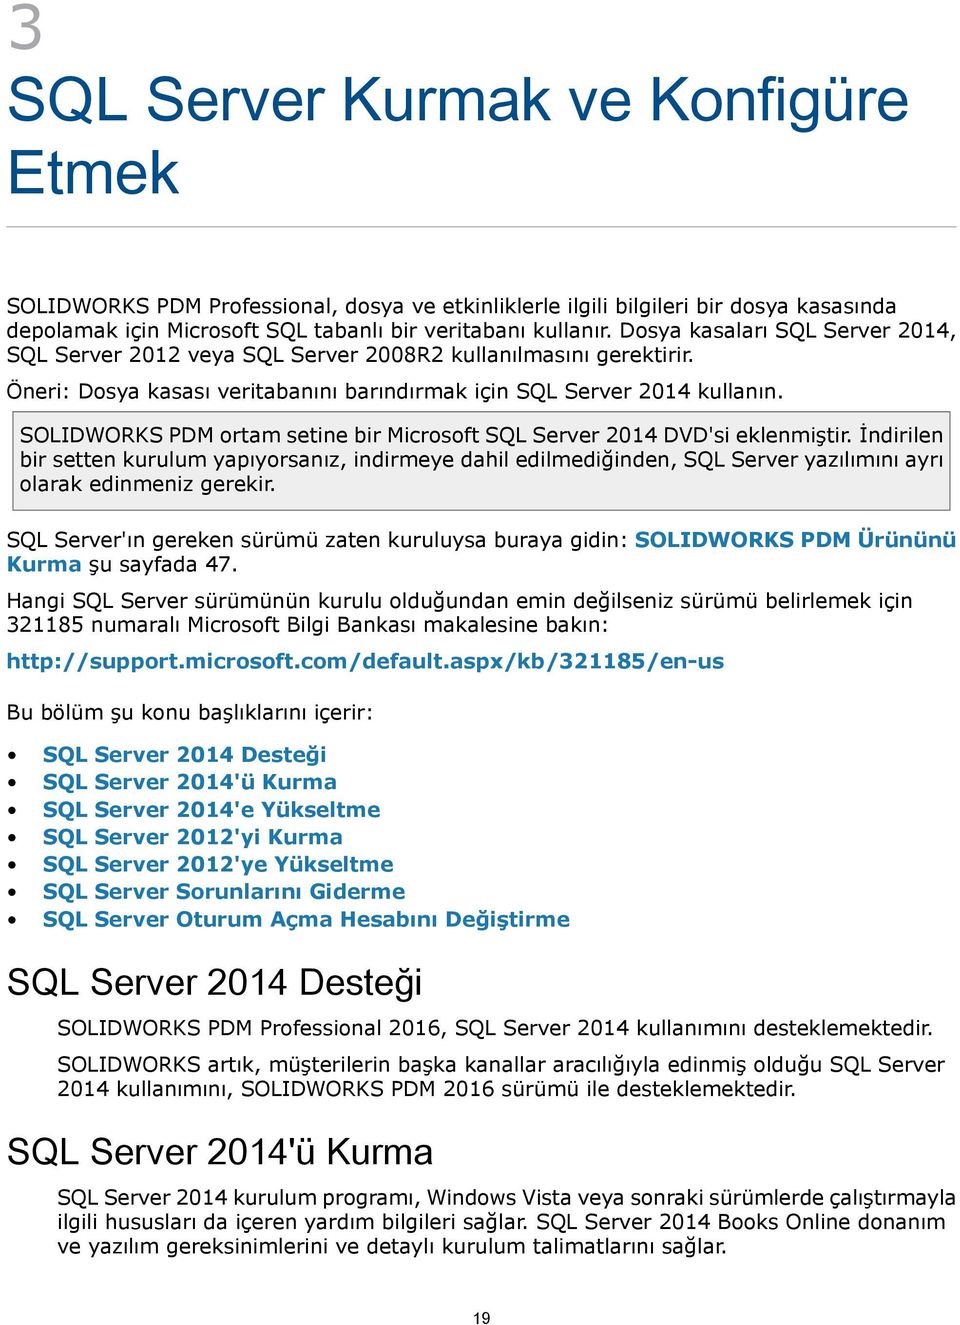 SOLIDWORKS PDM ortam setine bir Microsoft SQL Server 2014 DVD'si eklenmiştir.